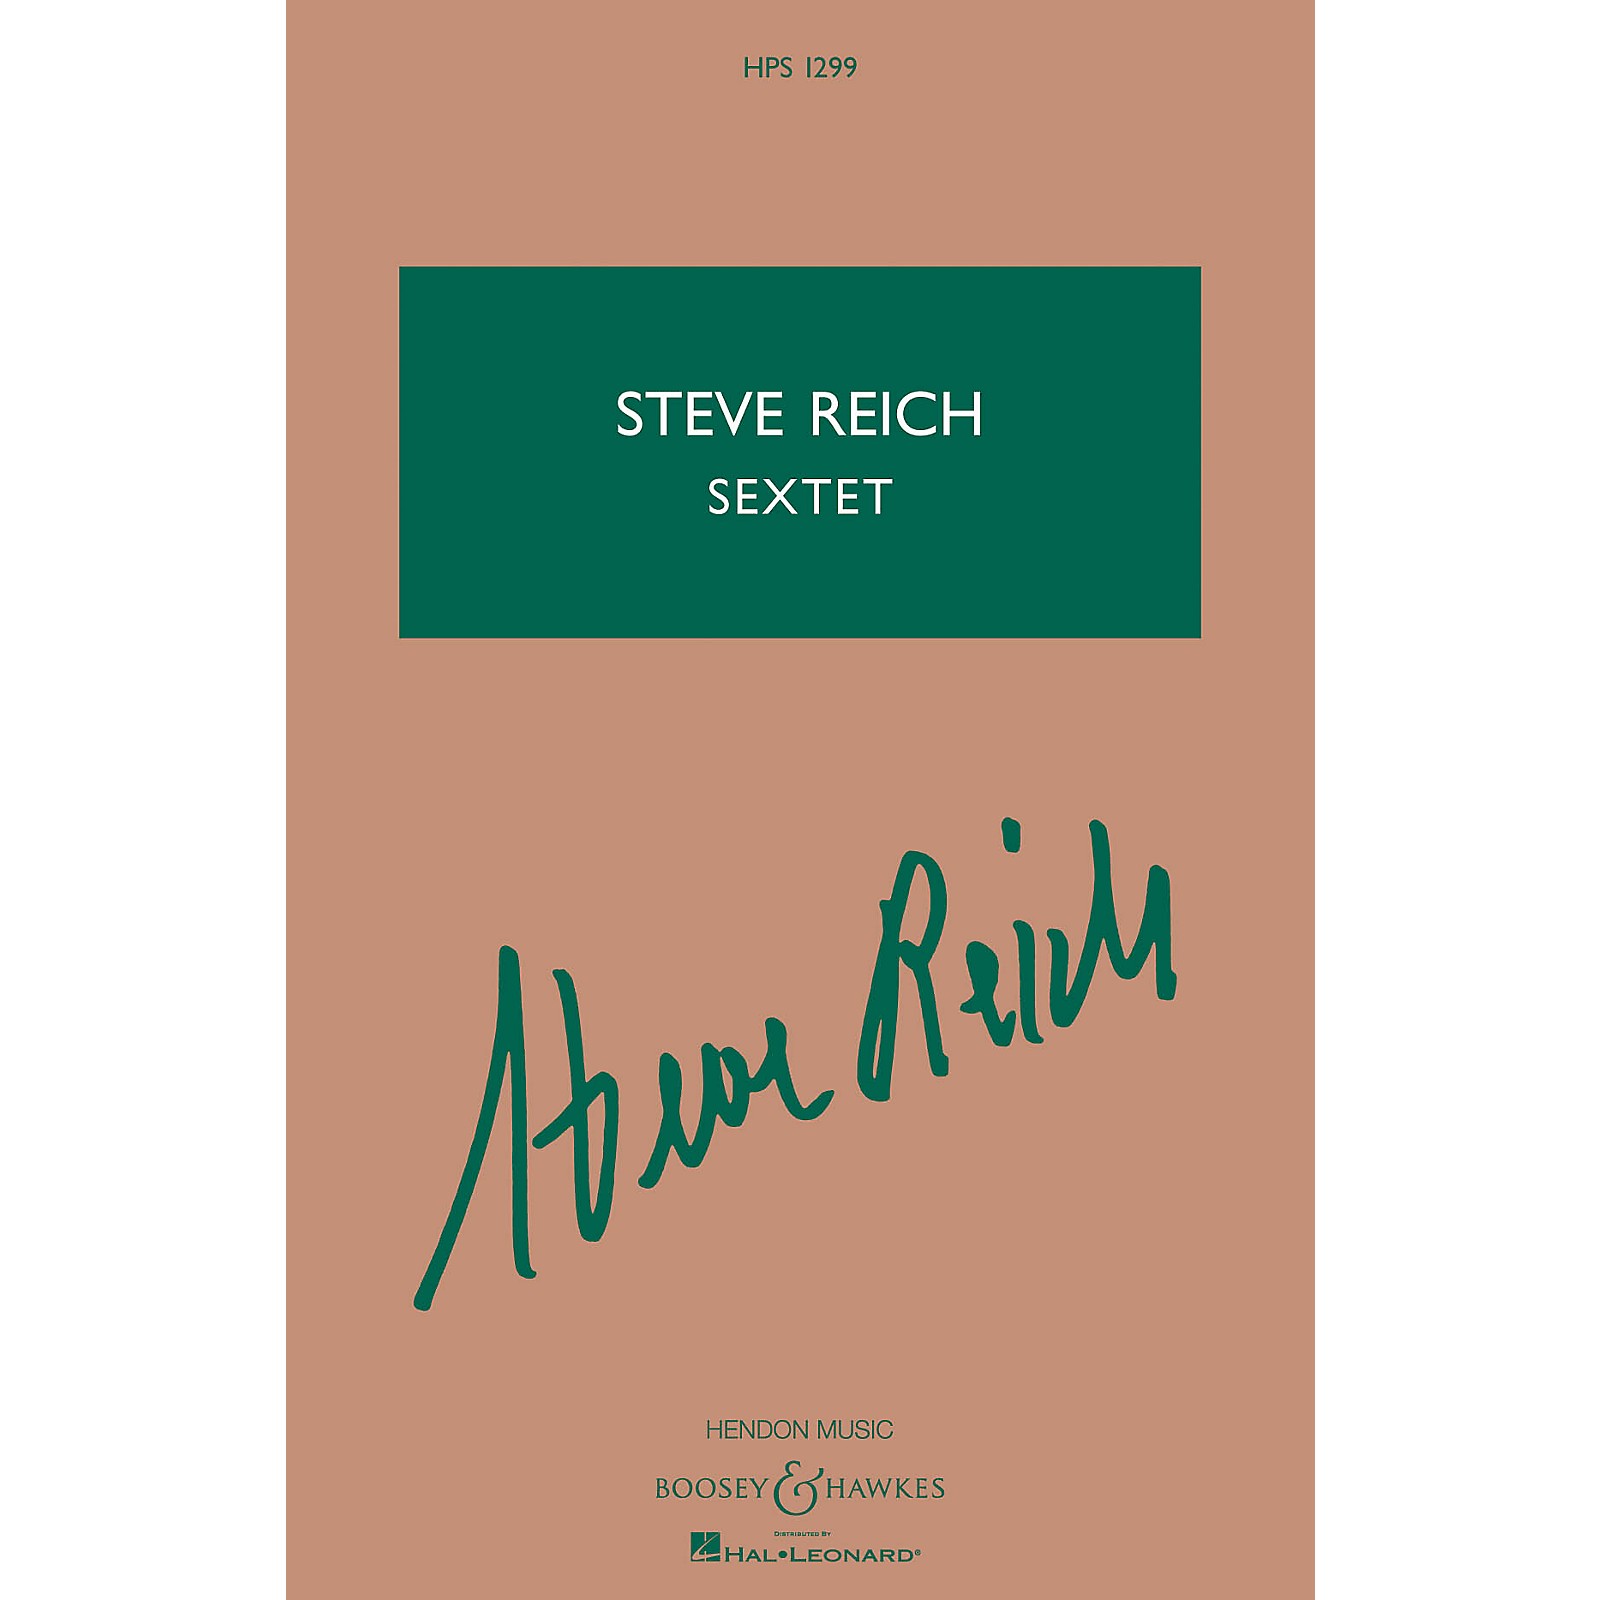 drumming steve reich score pdf download